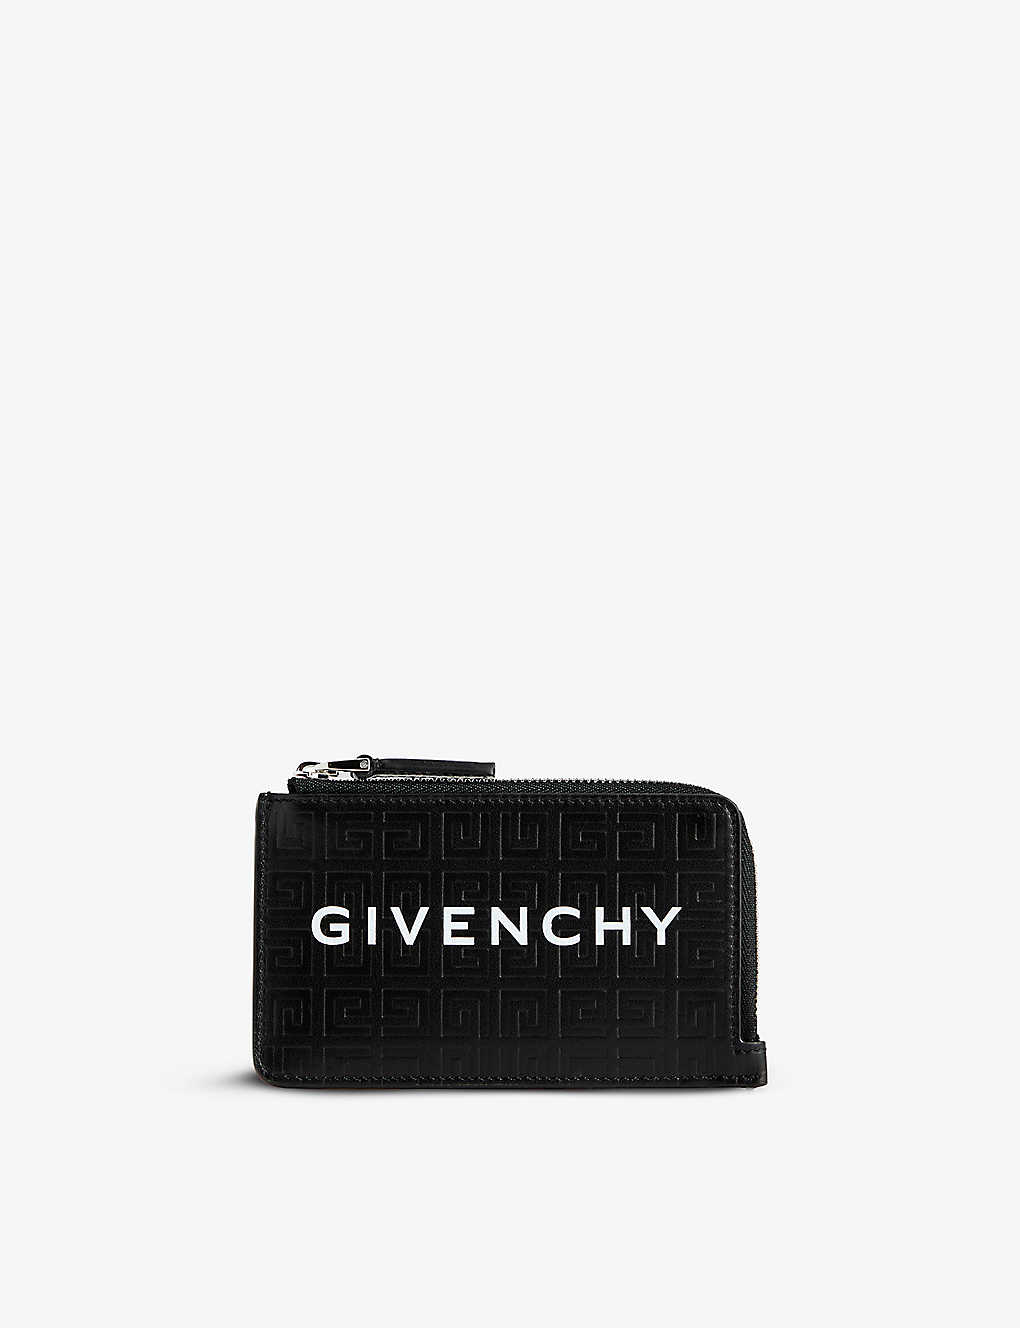 Givenchy Black Branded Faux-leather Cardholder